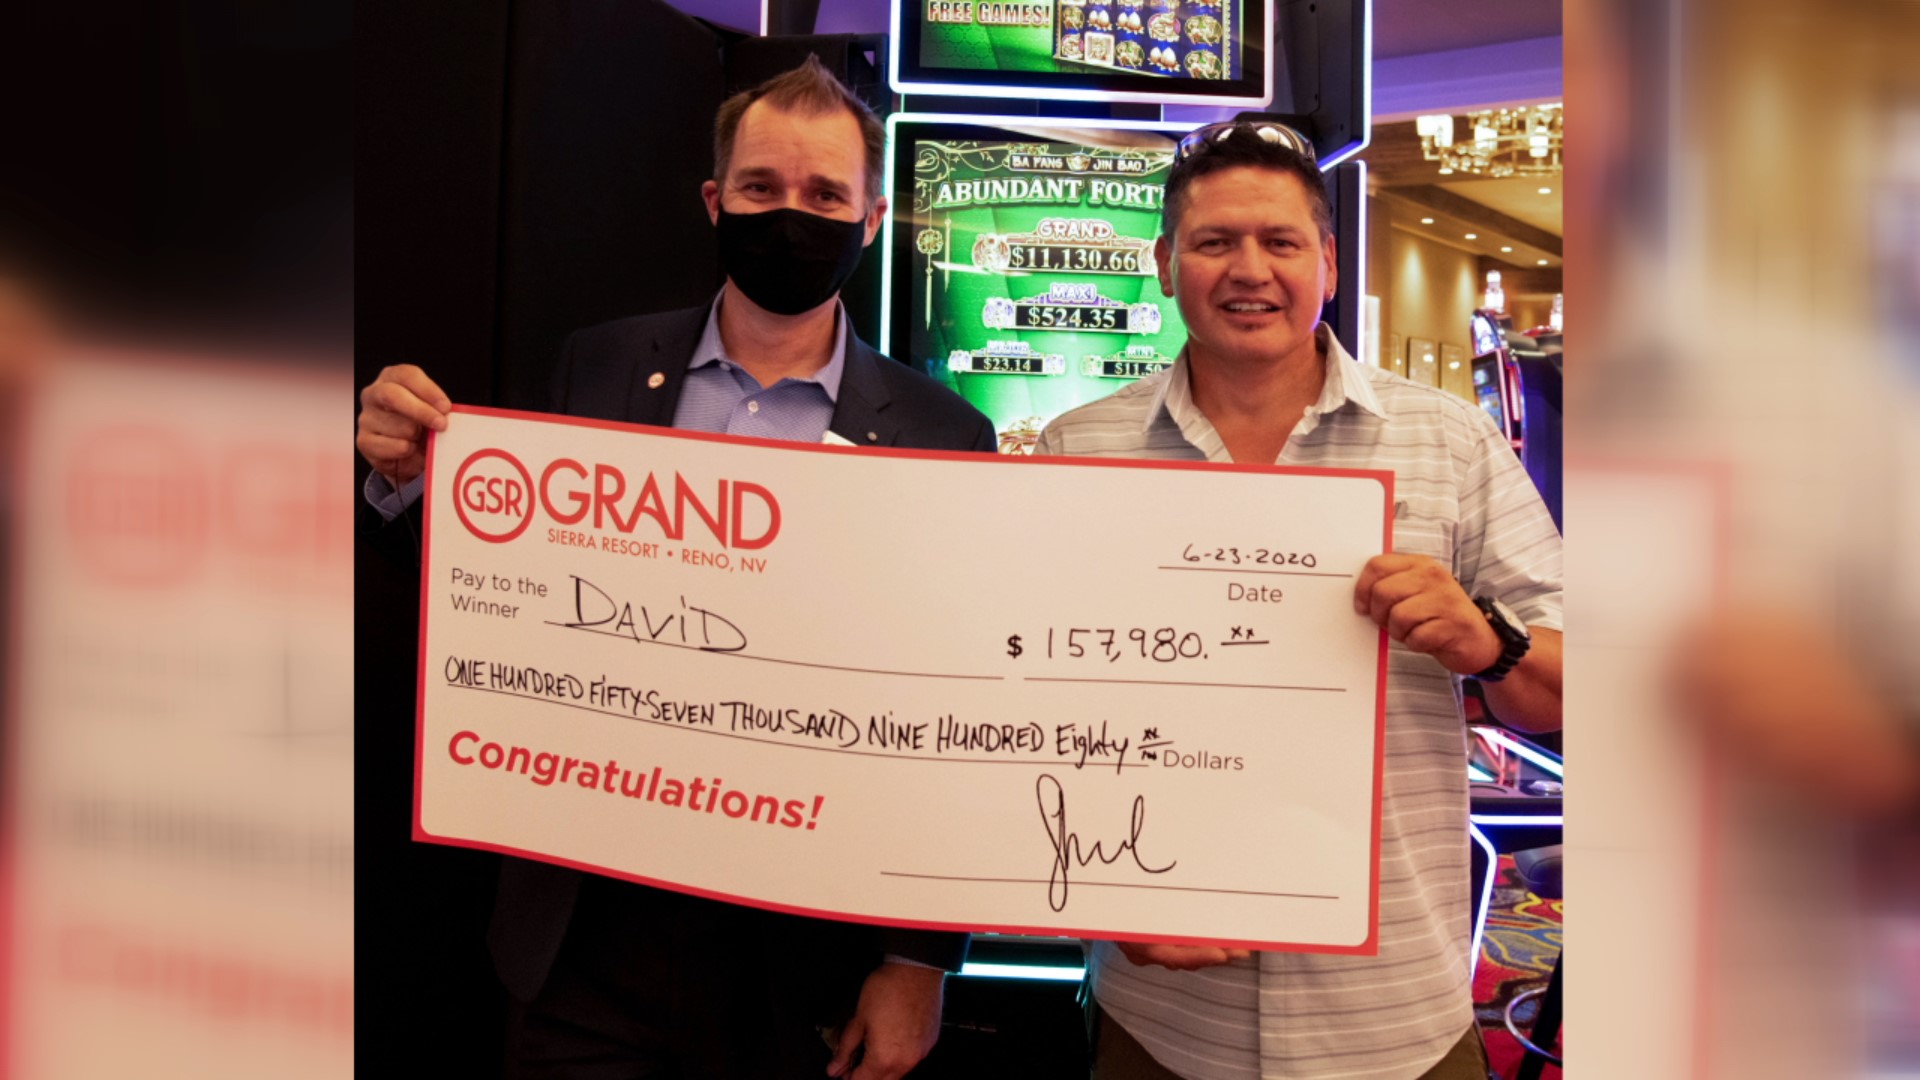 Reno Man Wins Largest Penny Slot Jackpot In Gsr History